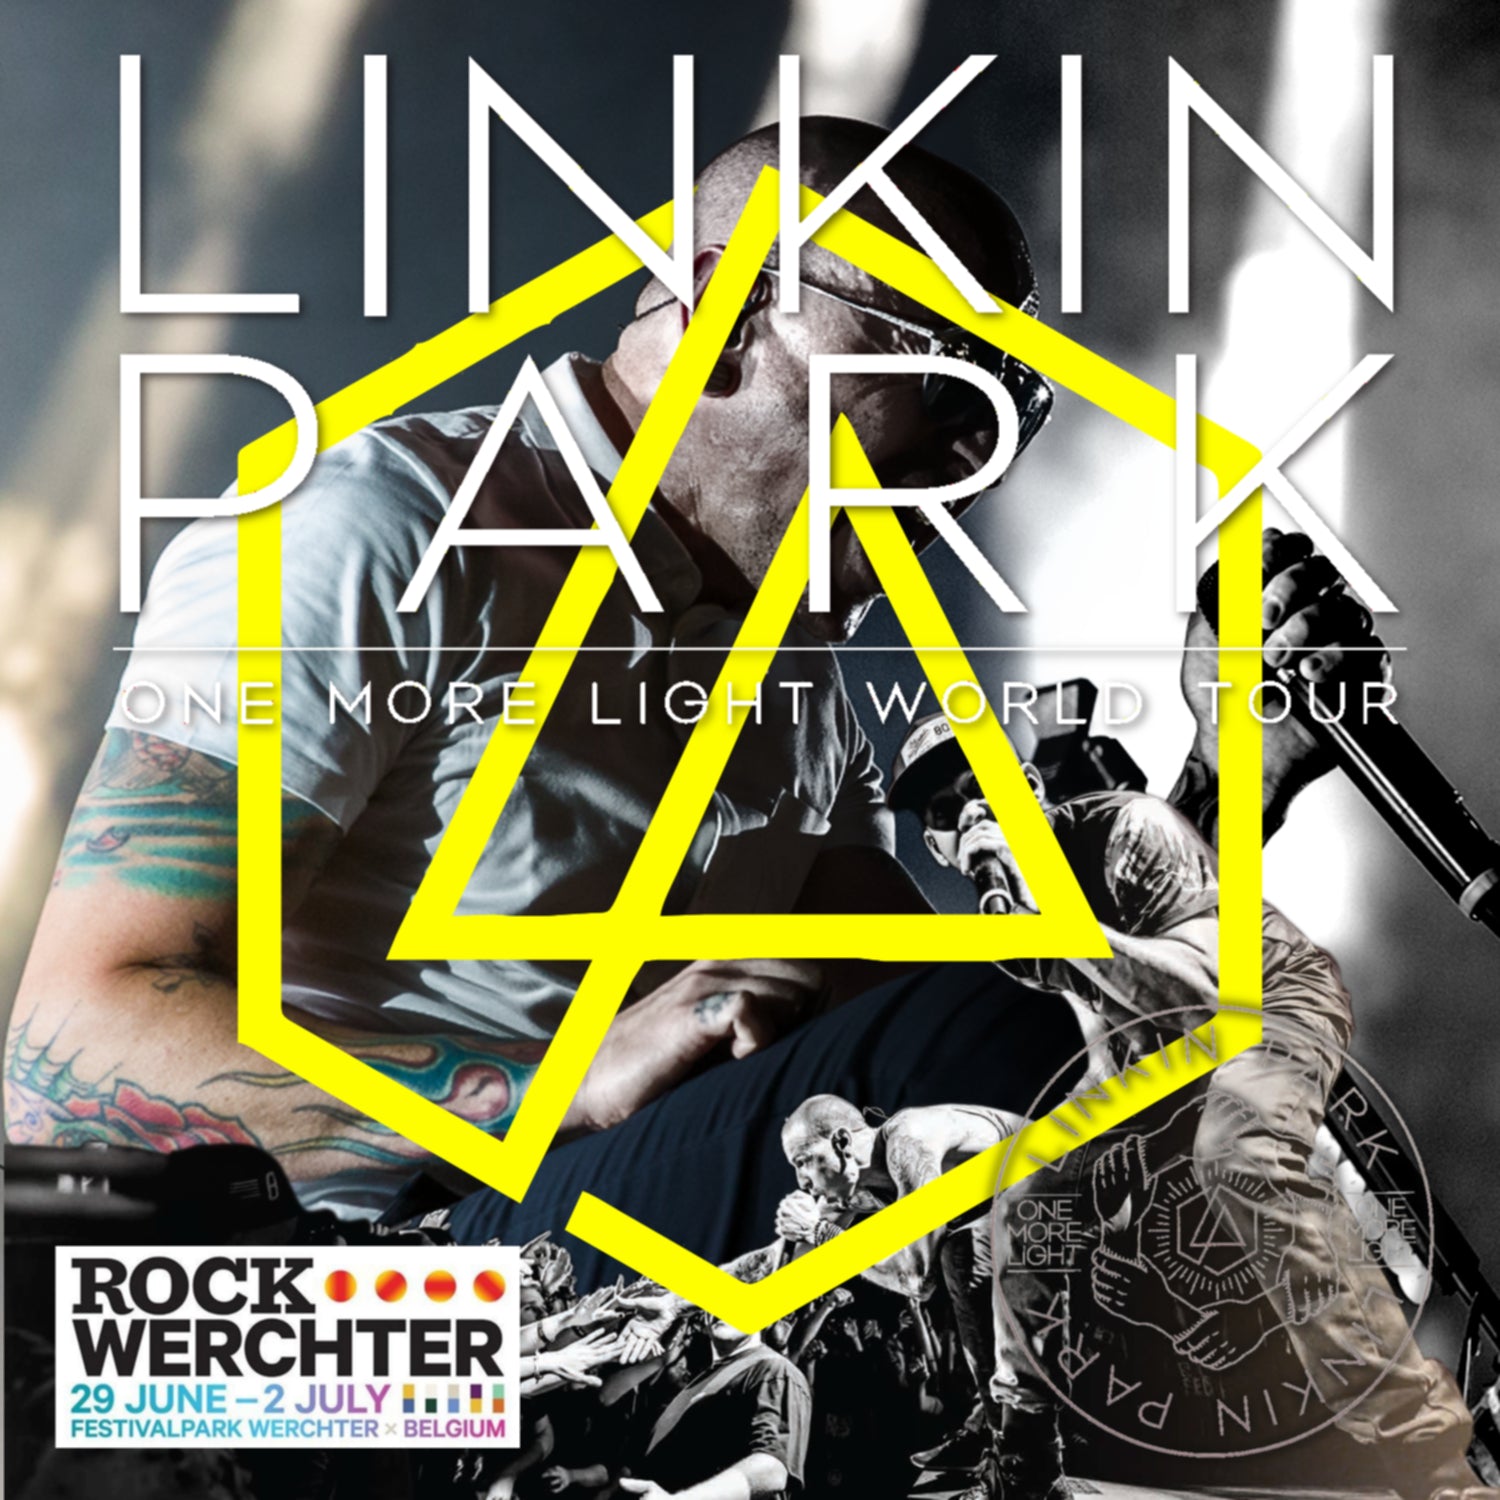 Linkin Park 2017 European Tour July 1, Belgium SBD